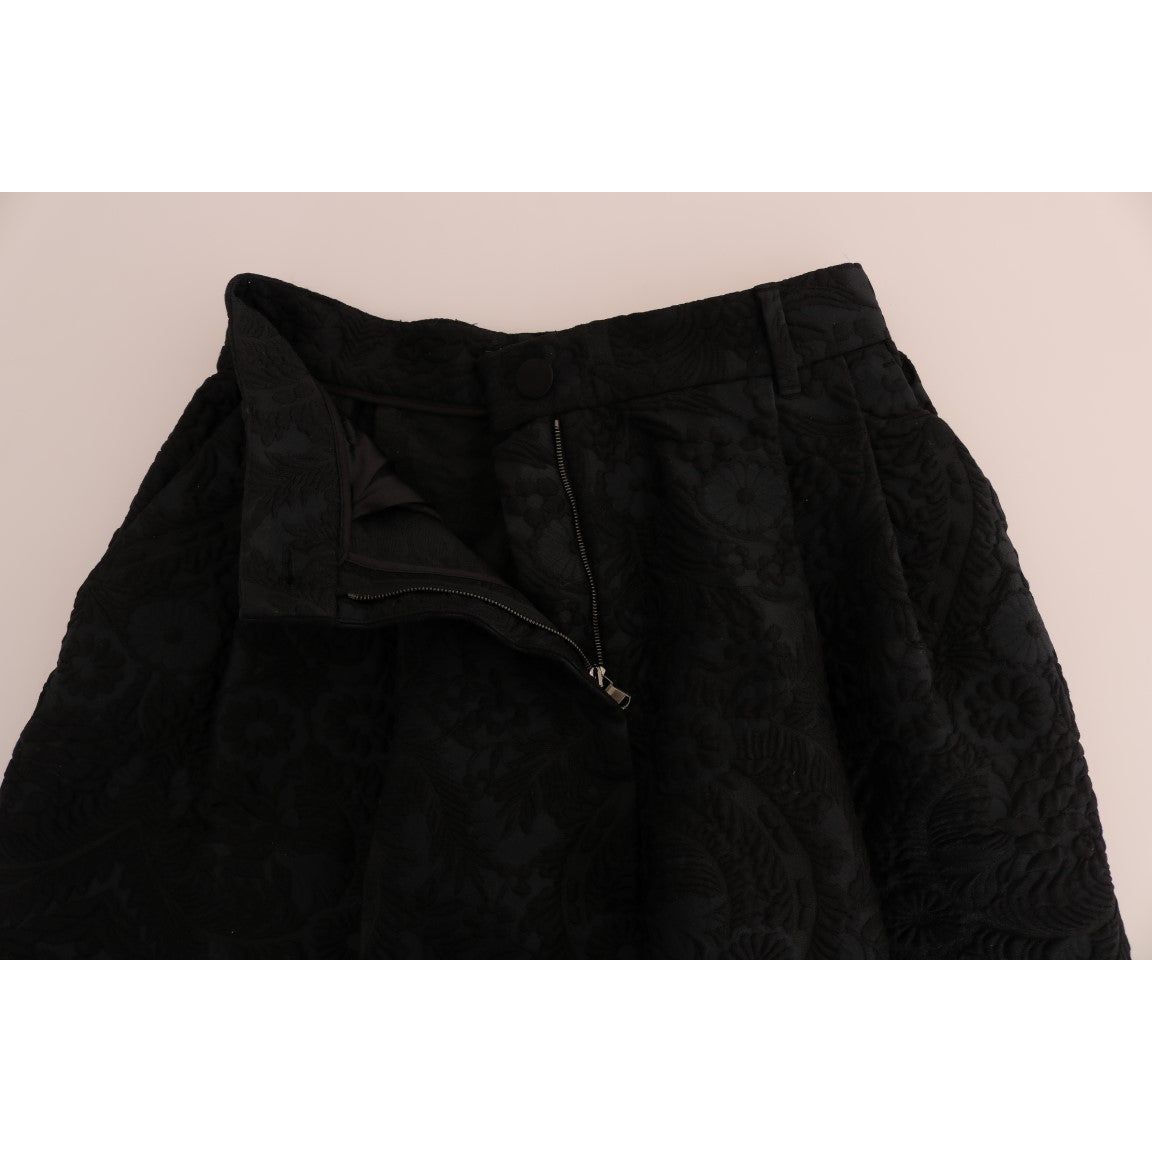 Dolce & Gabbana Elegant Floral Brocade Dress Shorts black-brocade-high-waist-capri-shorts Jeans & Pants 513087-black-brocade-high-waist-capri-shorts-3.jpg